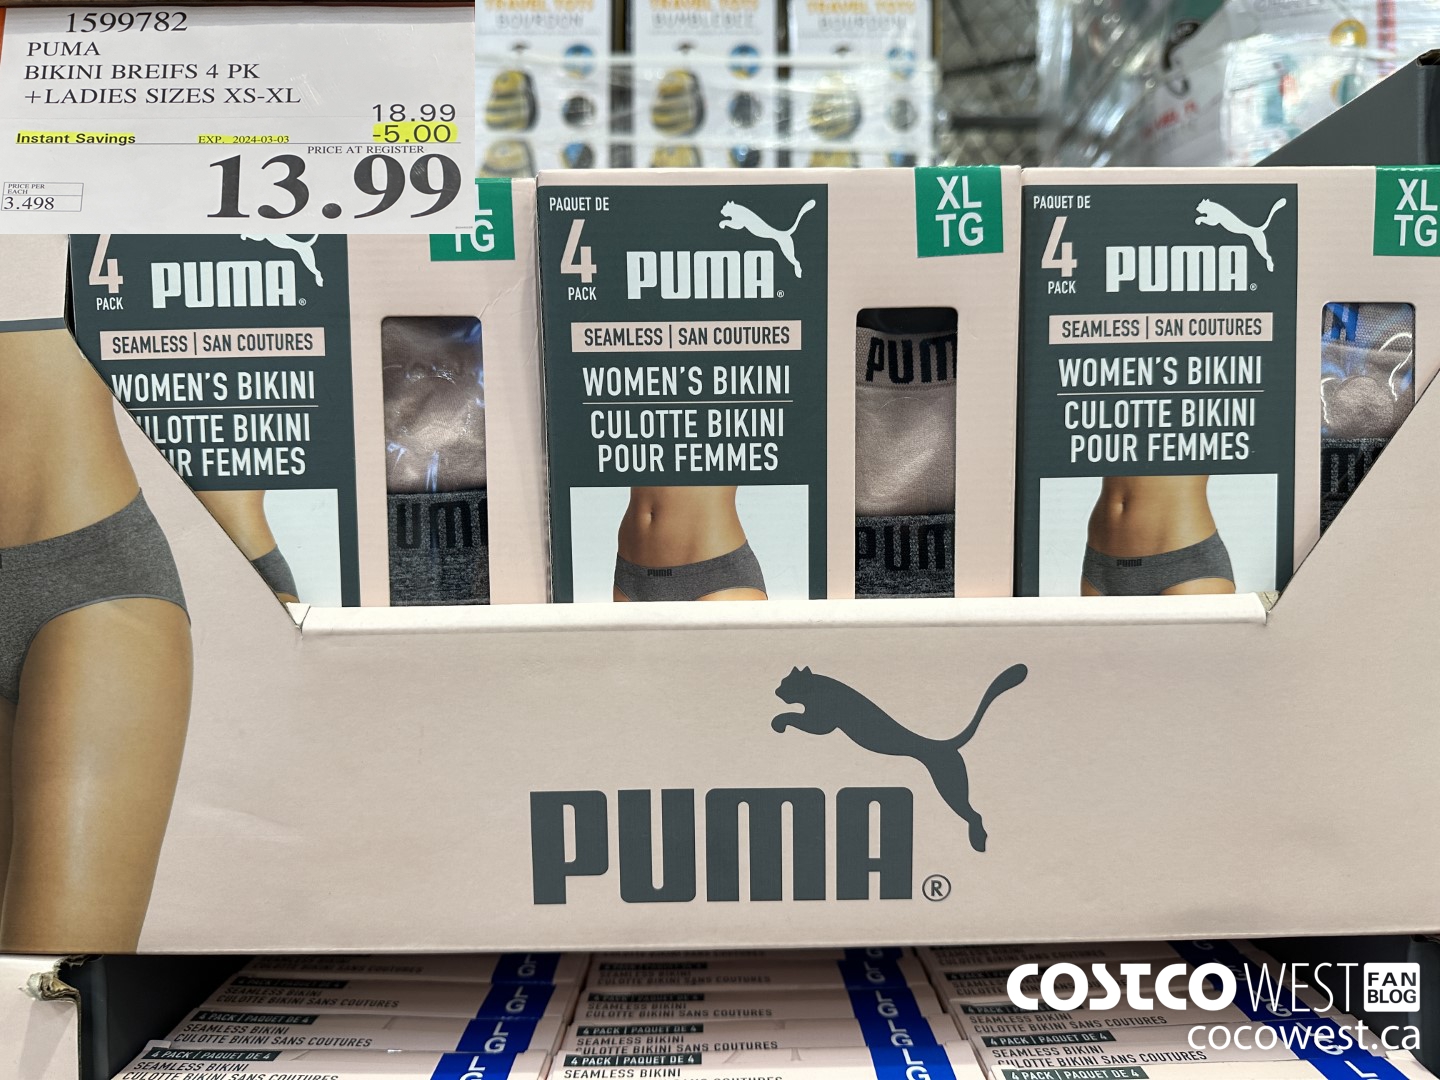 Puma Ladies Seamless Bikini, 4-pack, Costco deals this week, Costco flyer